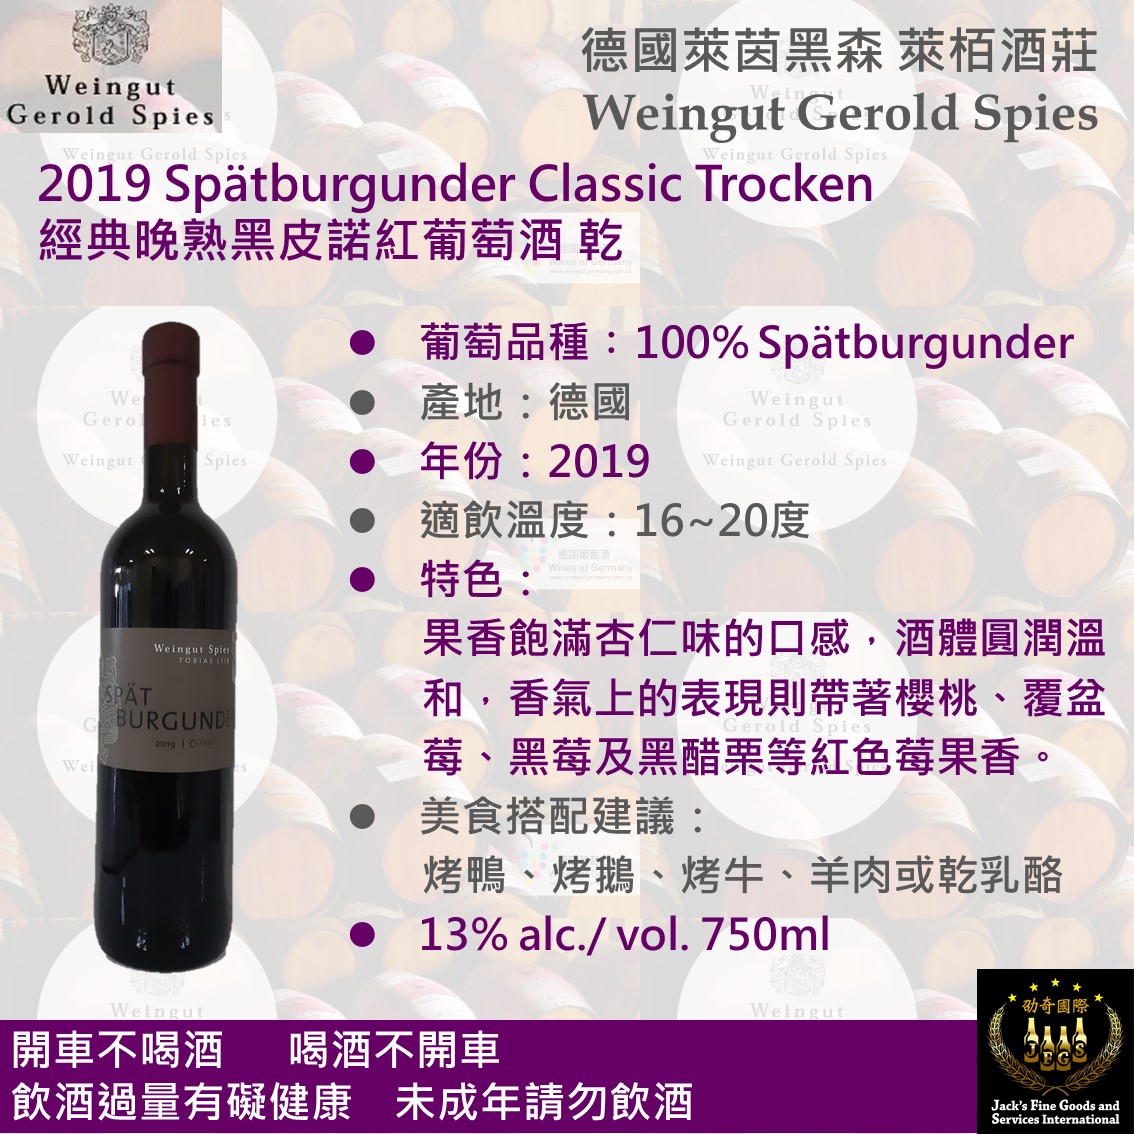 30X30cm 鋁掛軸 德國萊茵黑森 紅酒 2019 Spätburgunder Classic trocken 經典晚熟黑皮諾 優質紅酒 乾